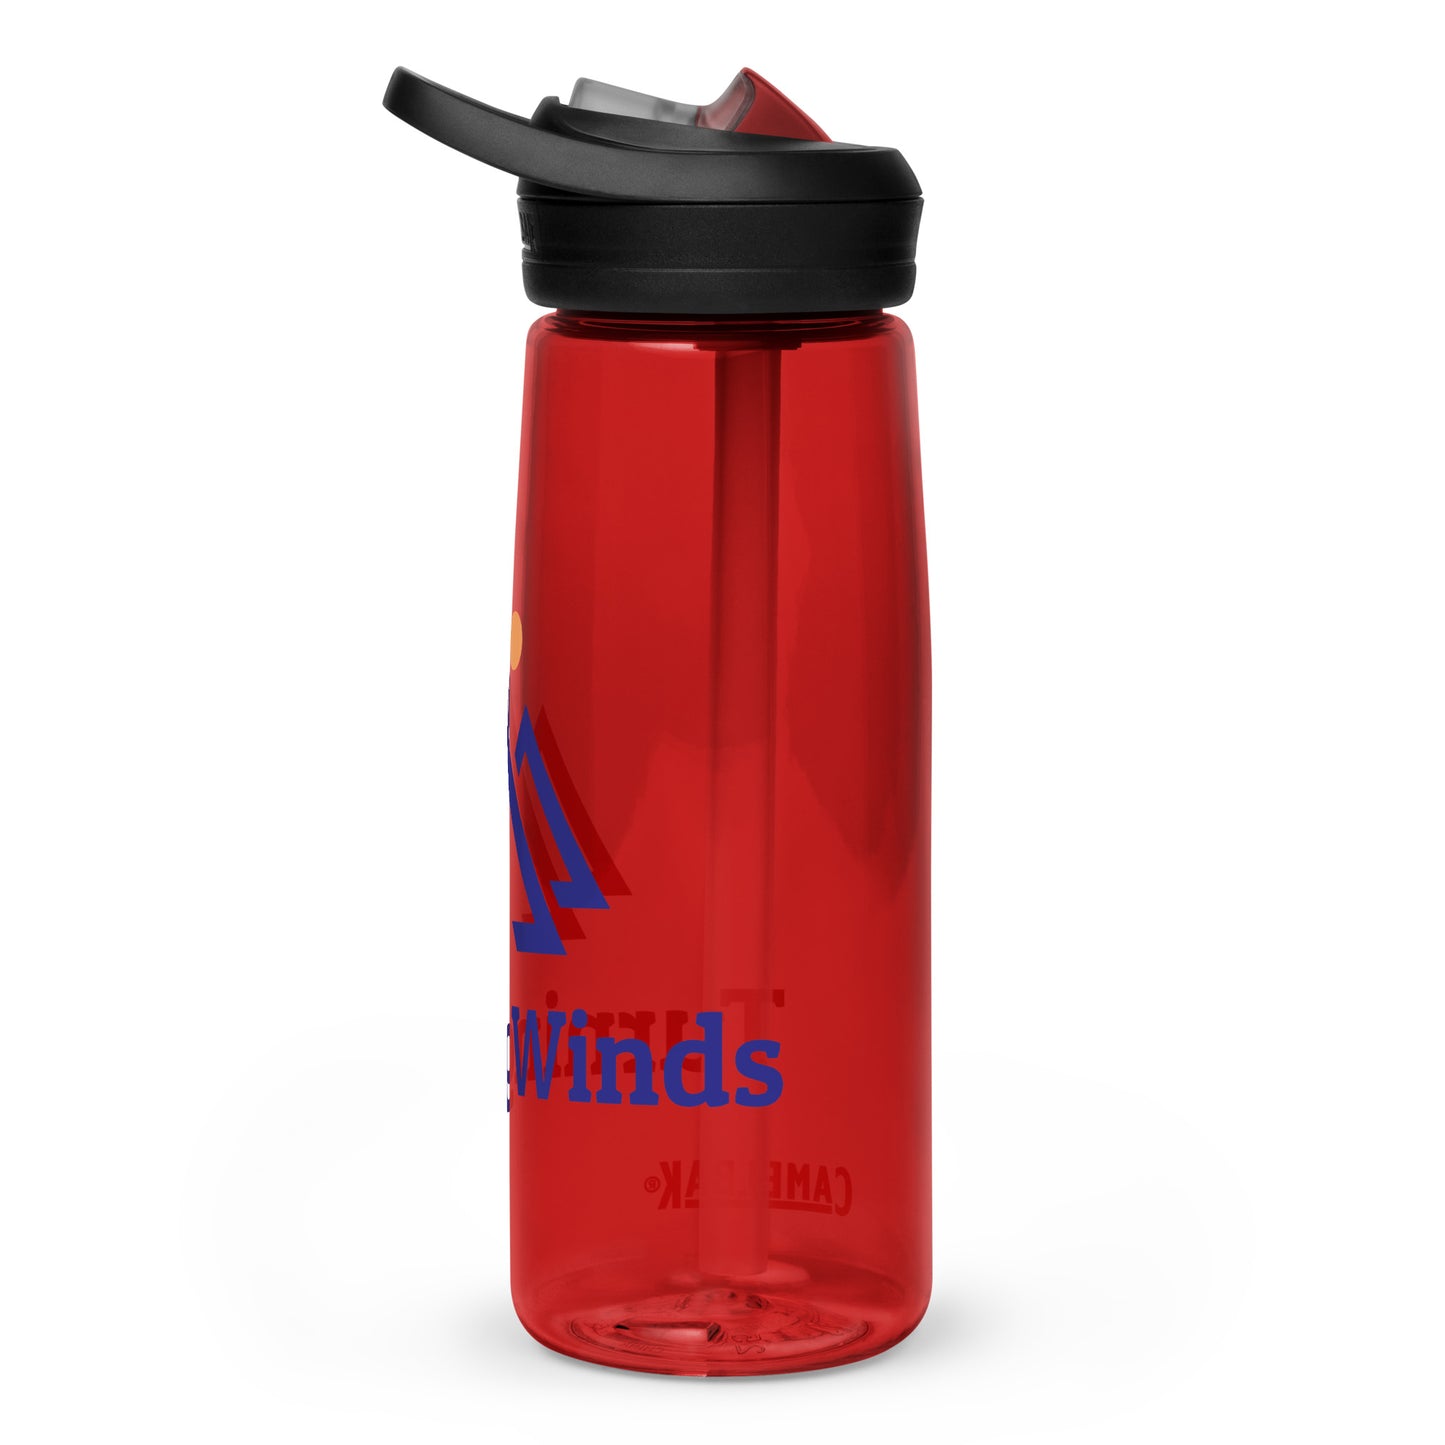 Turning Winds Logo Sports water bottle